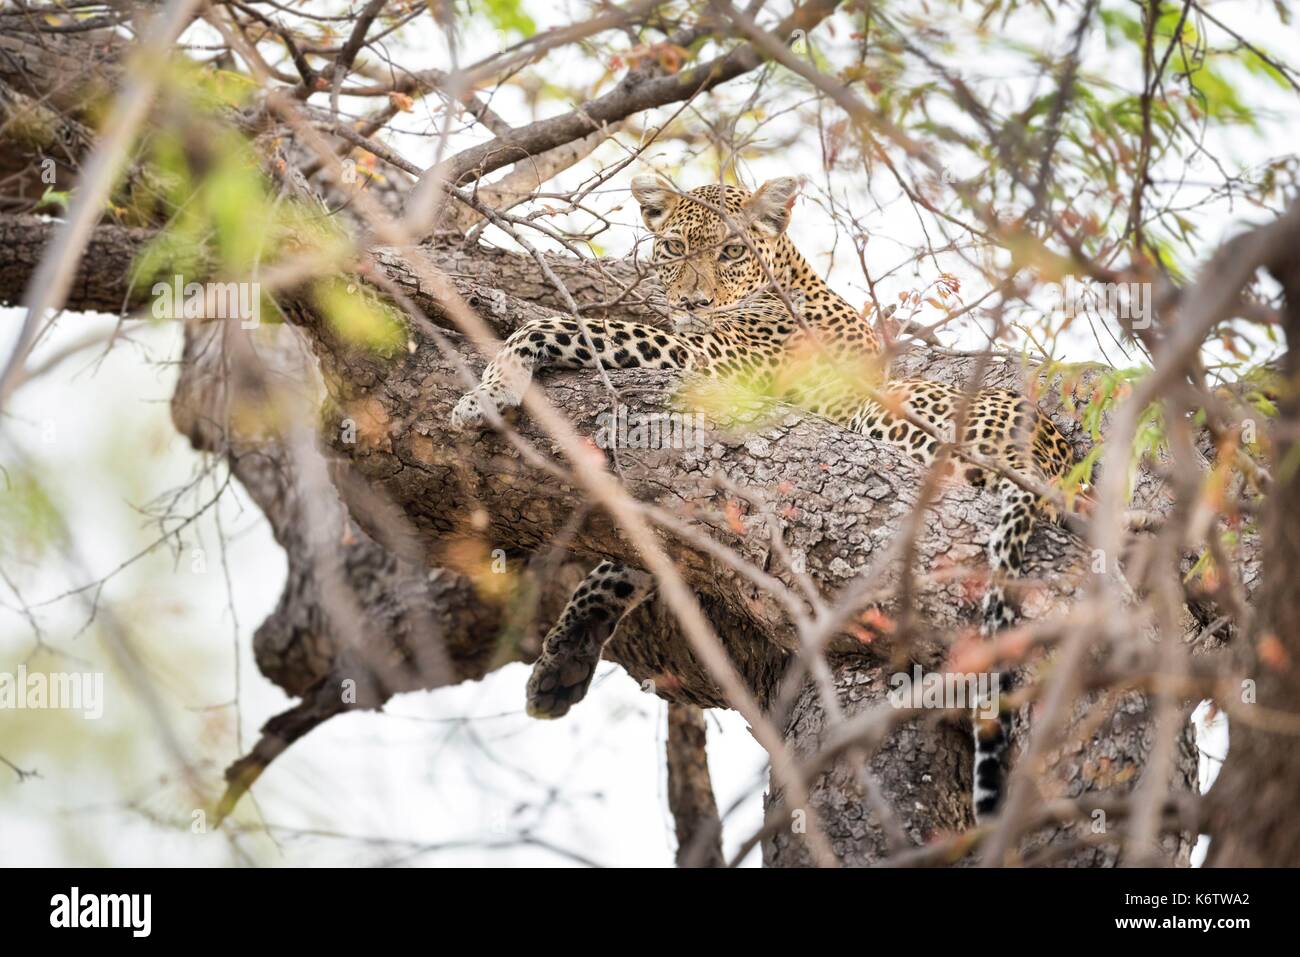 Tanzania, Iringa region, Ruaha National Park, leopard (Panthera pardus) Stock Photo